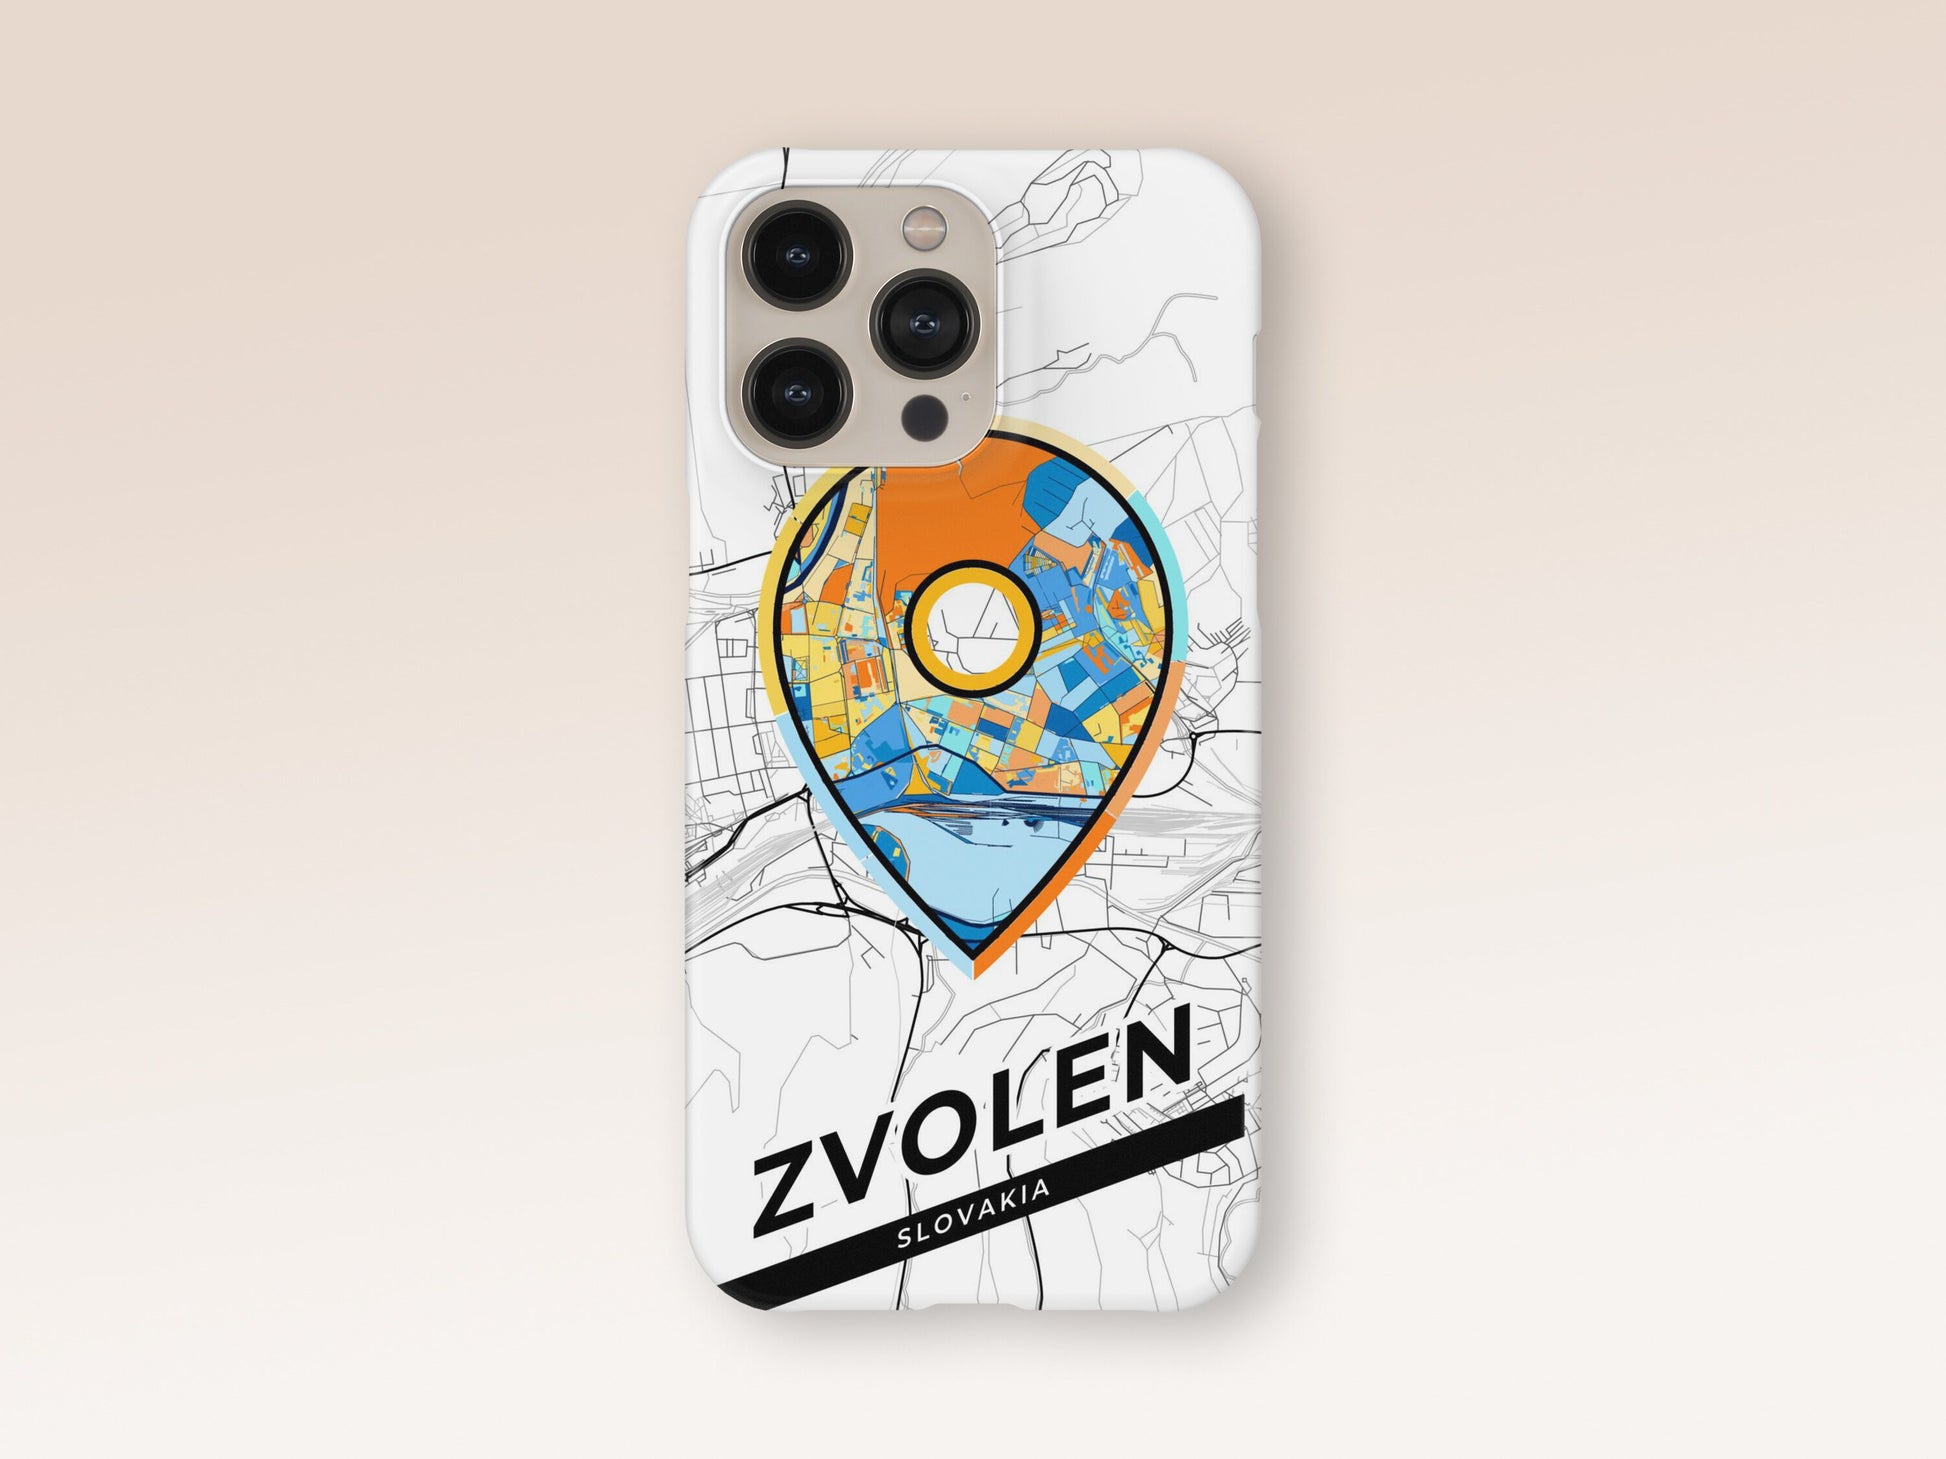 Zvolen Slovakia slim phone case with colorful icon 1